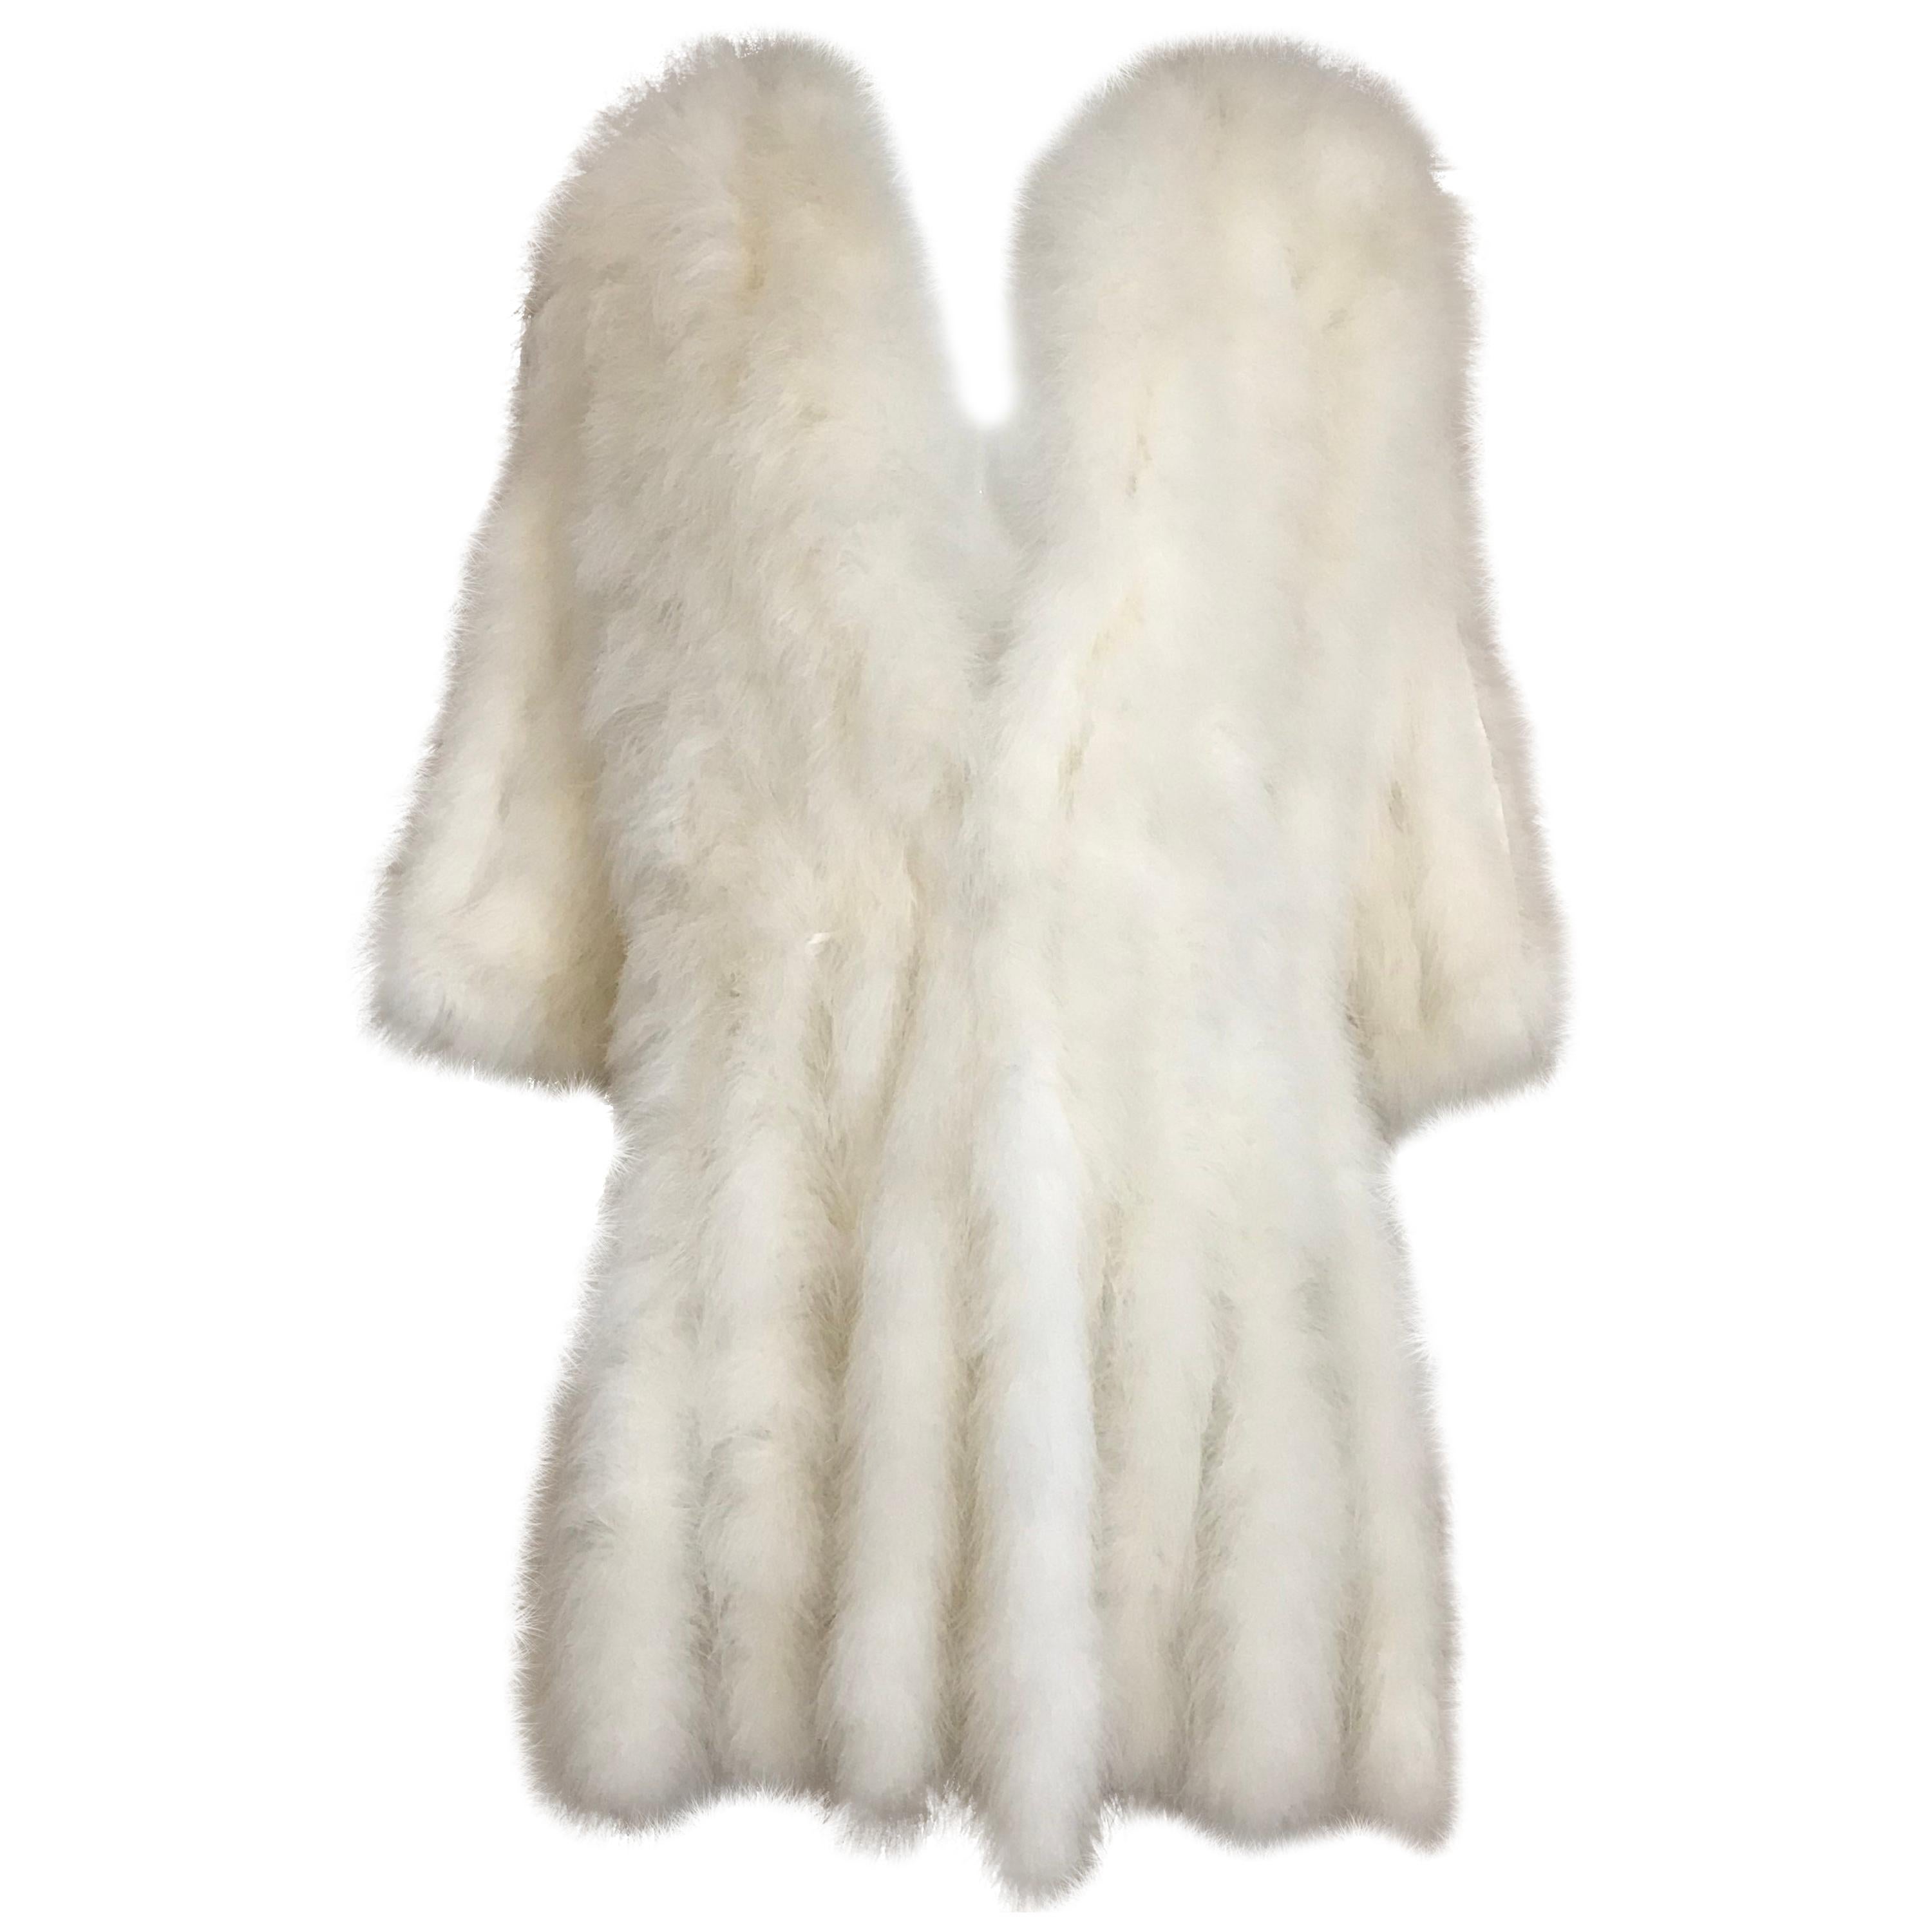 1960s Creme Ostrich Feathers Light Coat